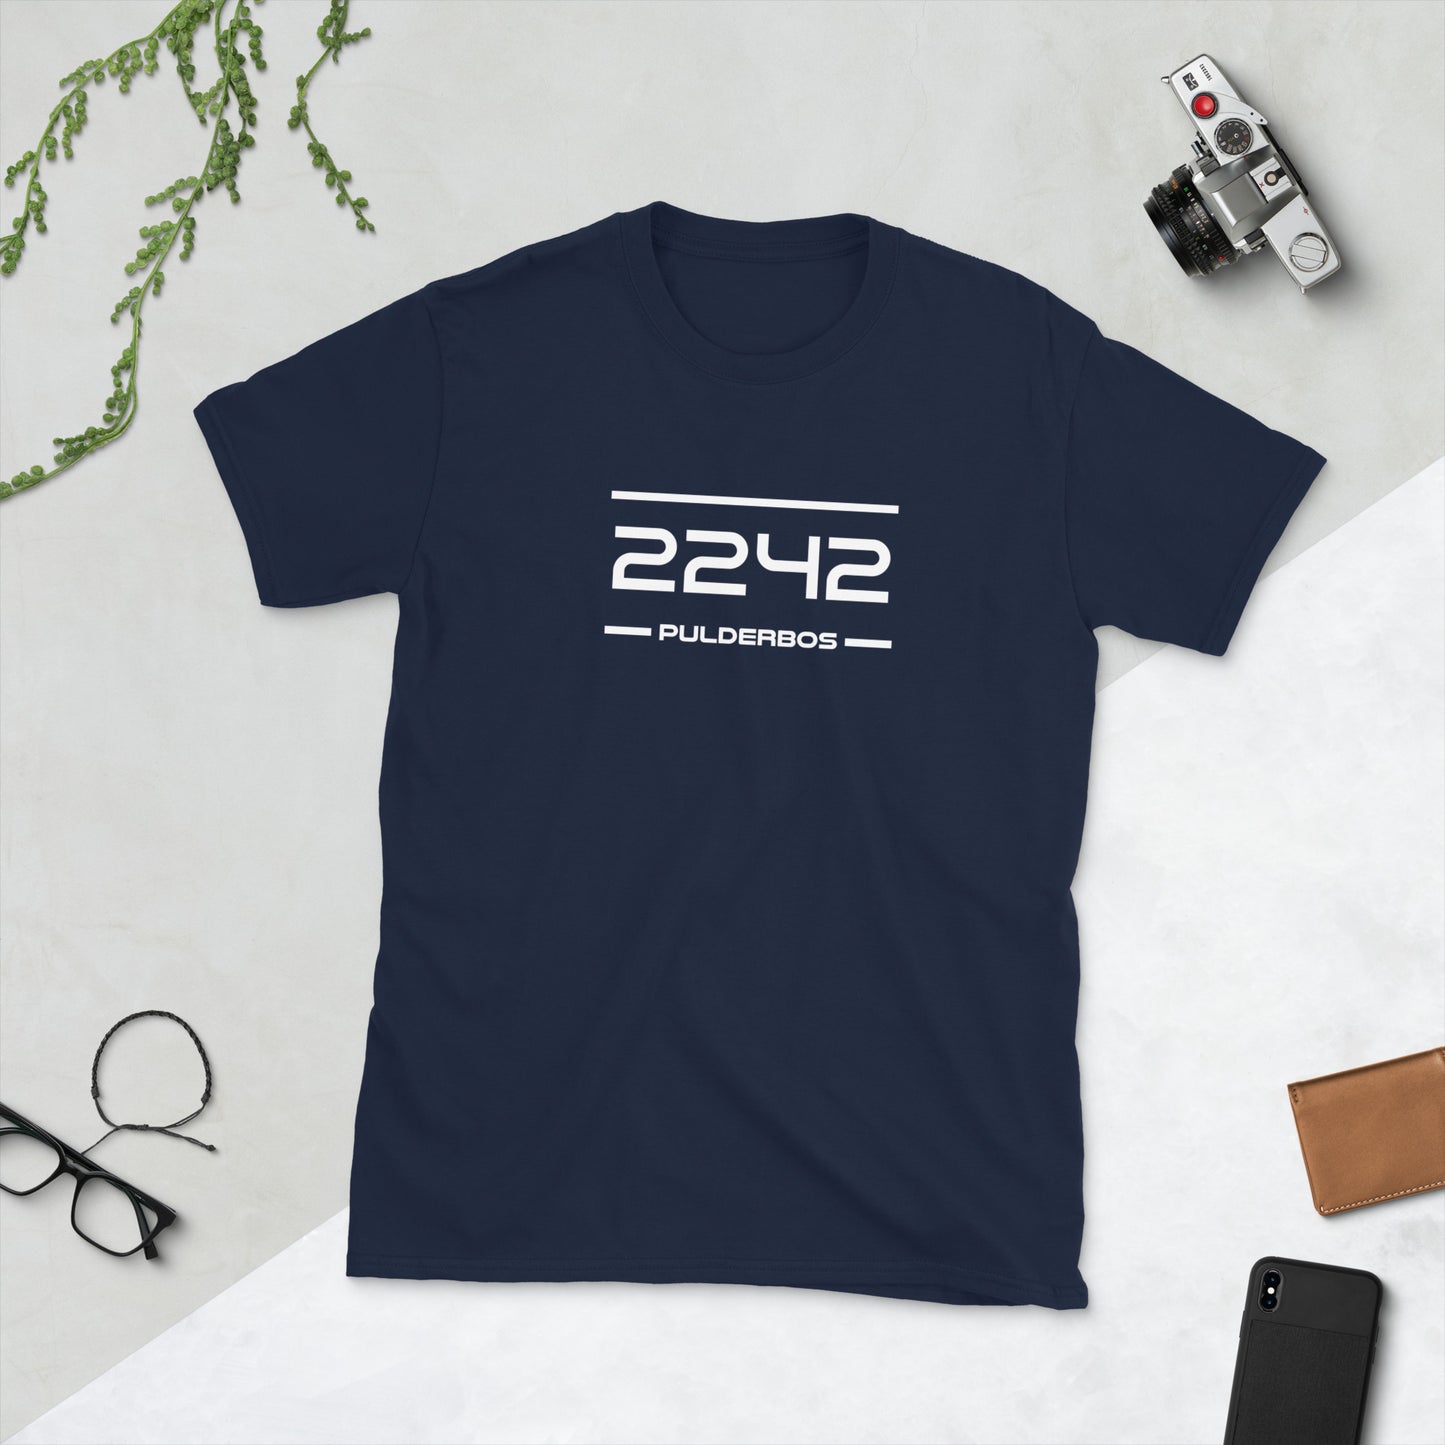 Tshirt - 2242 - Pulderbos